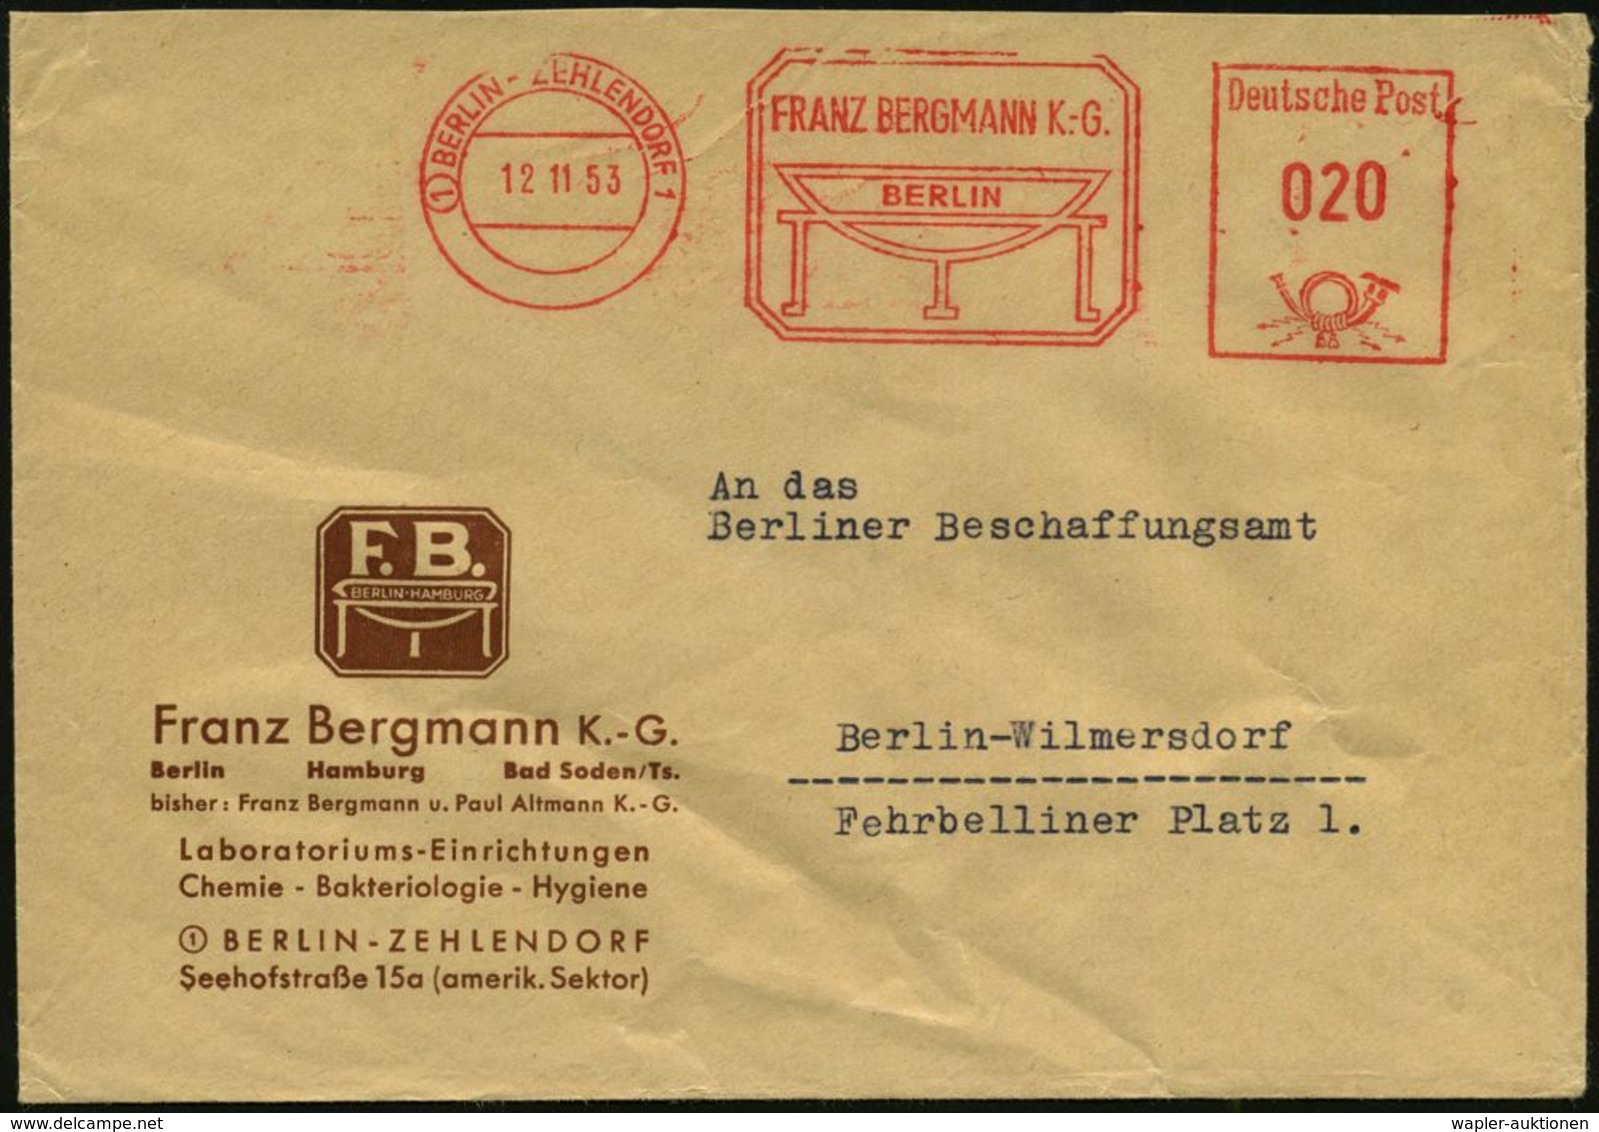 MEDIZINISCHE AUSRÜSTUNG & INSTRUMENTE : (1) BERLIN-ZEHLENDORF 1/ FRANZ BERGMANN KG. 1953 (12.11.) AFS (Schalen-Logo) Mot - Medicine